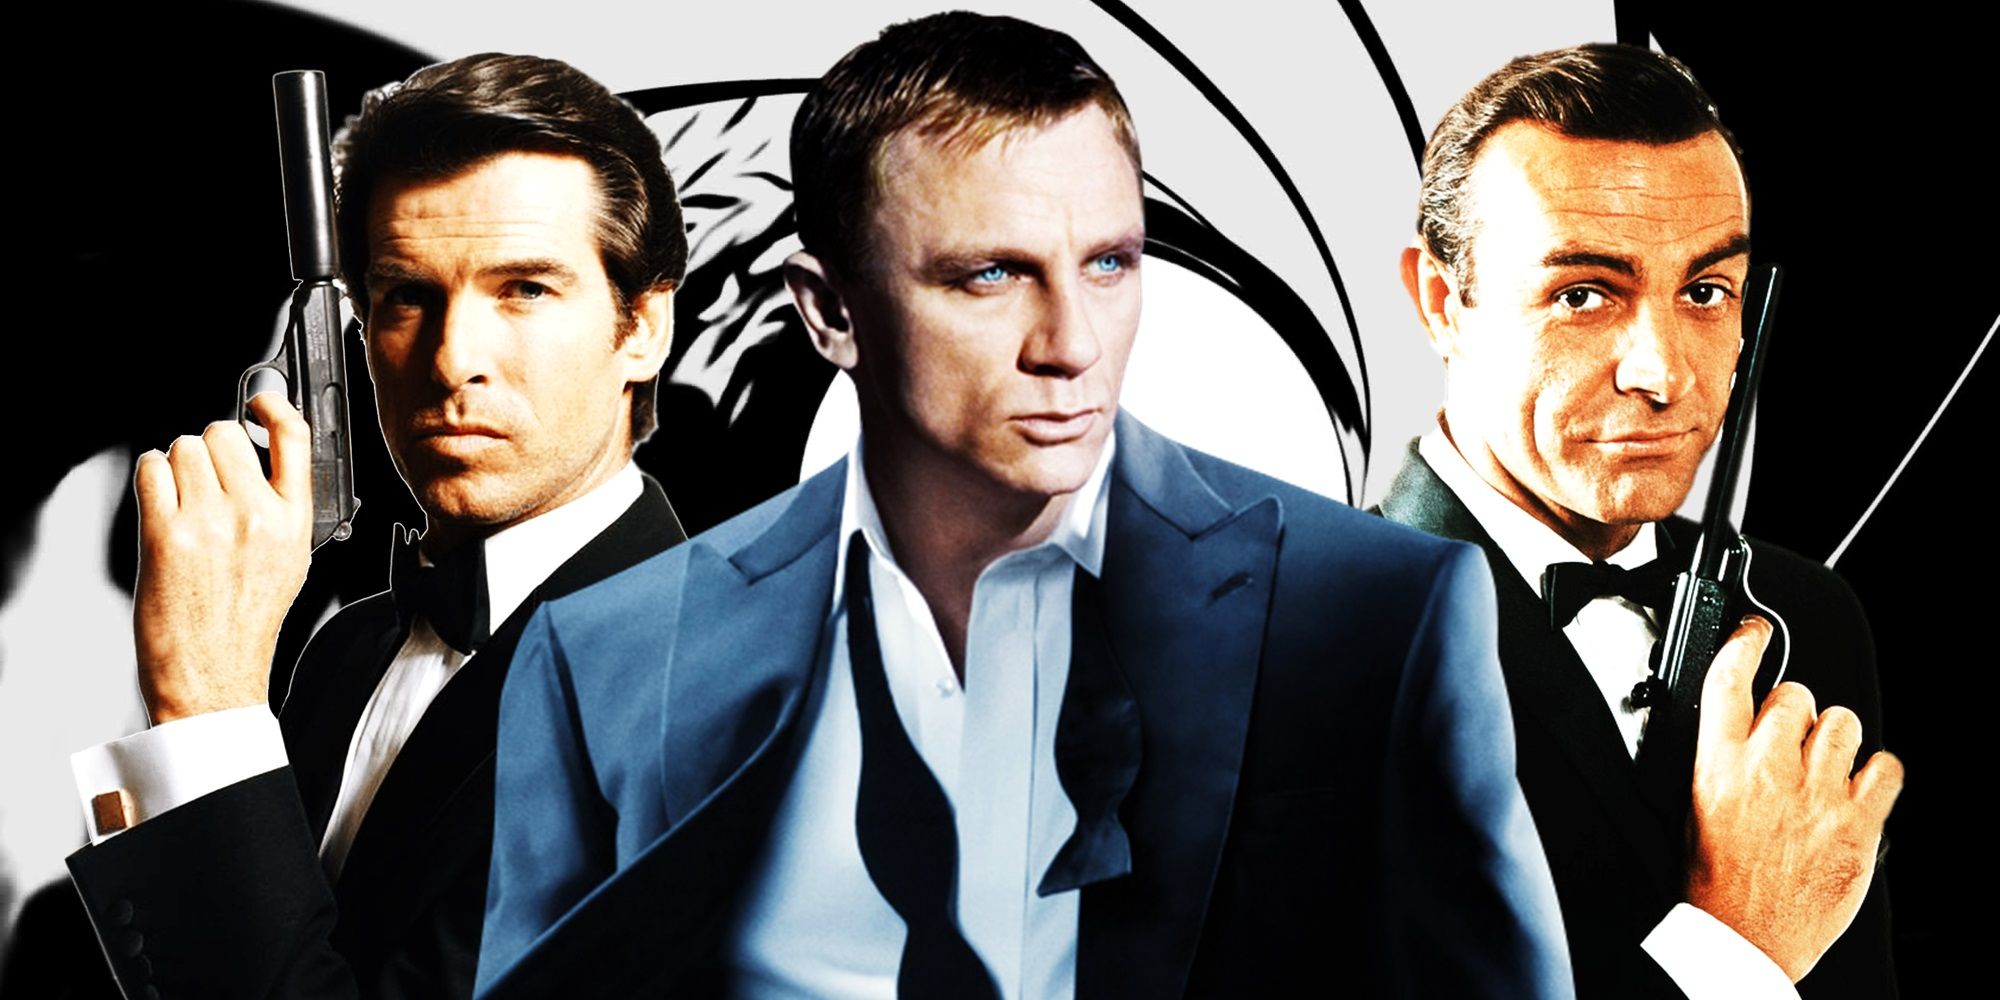 Upcoming Thriller Movie Can Deliver On 2 “Next James Bond Actor” Favorites (That Bond 26 Won’t)